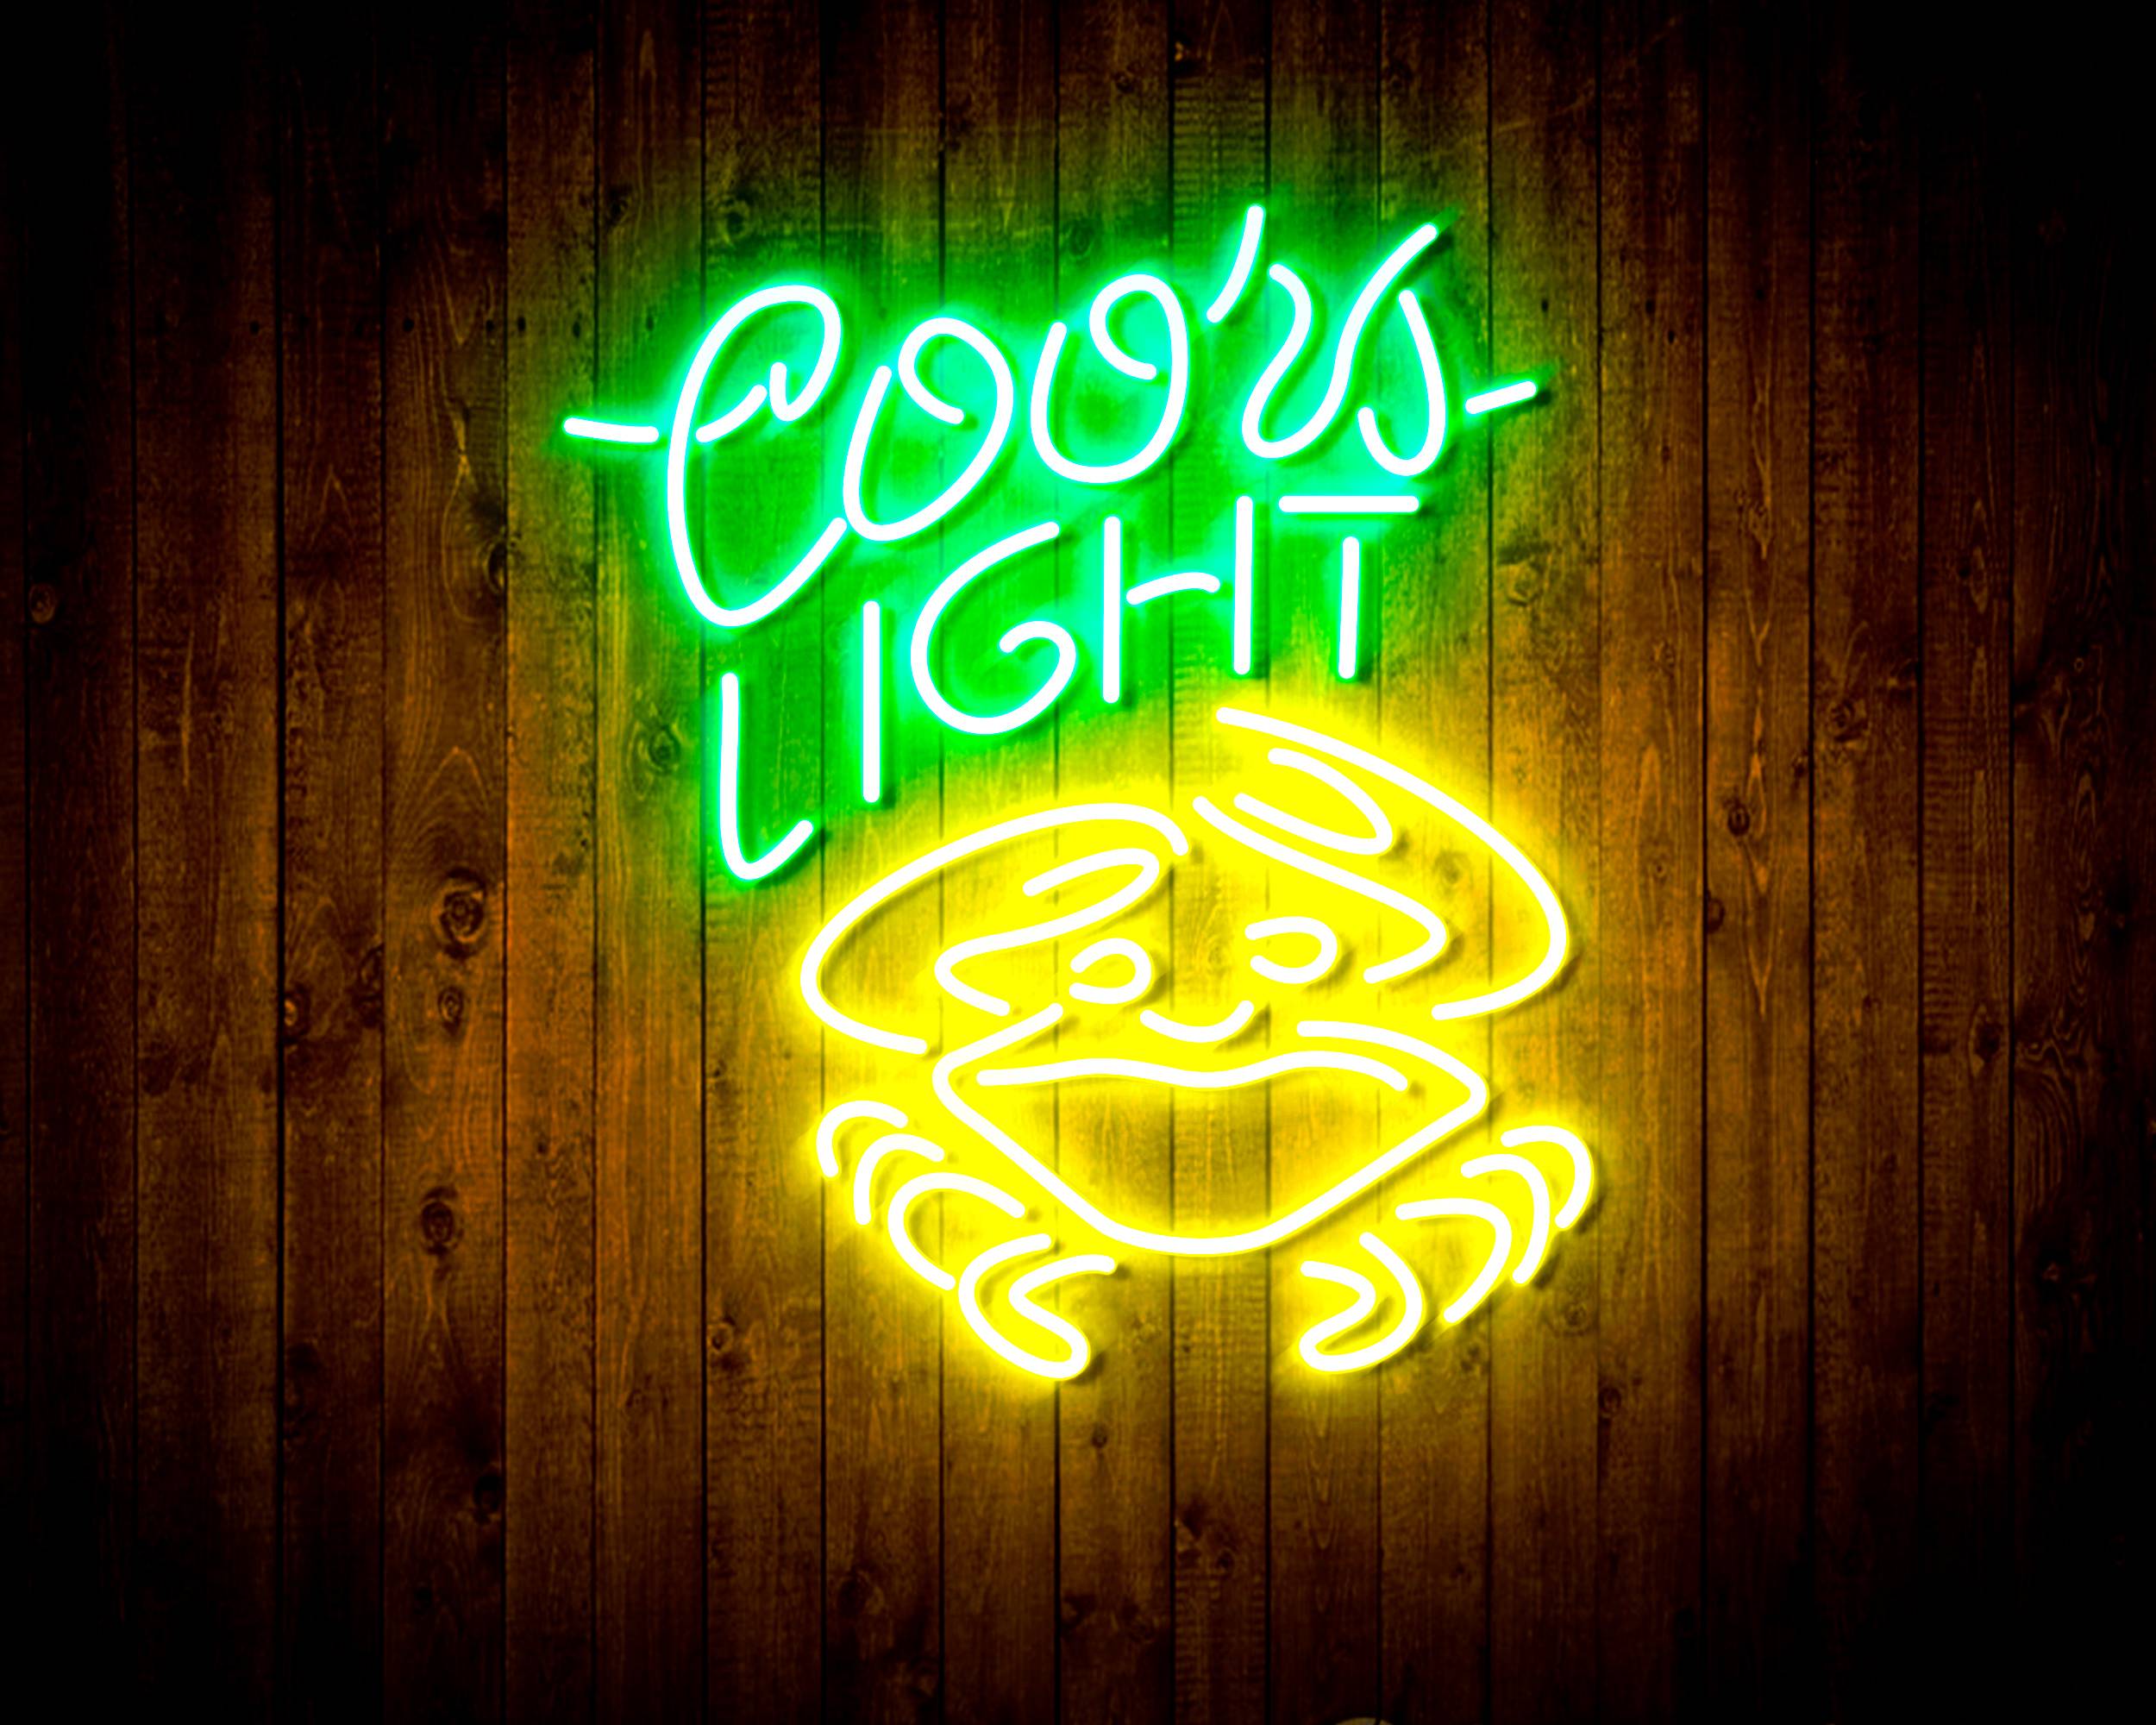 Coors Light Crab Handmade Neon Flex LED Sign